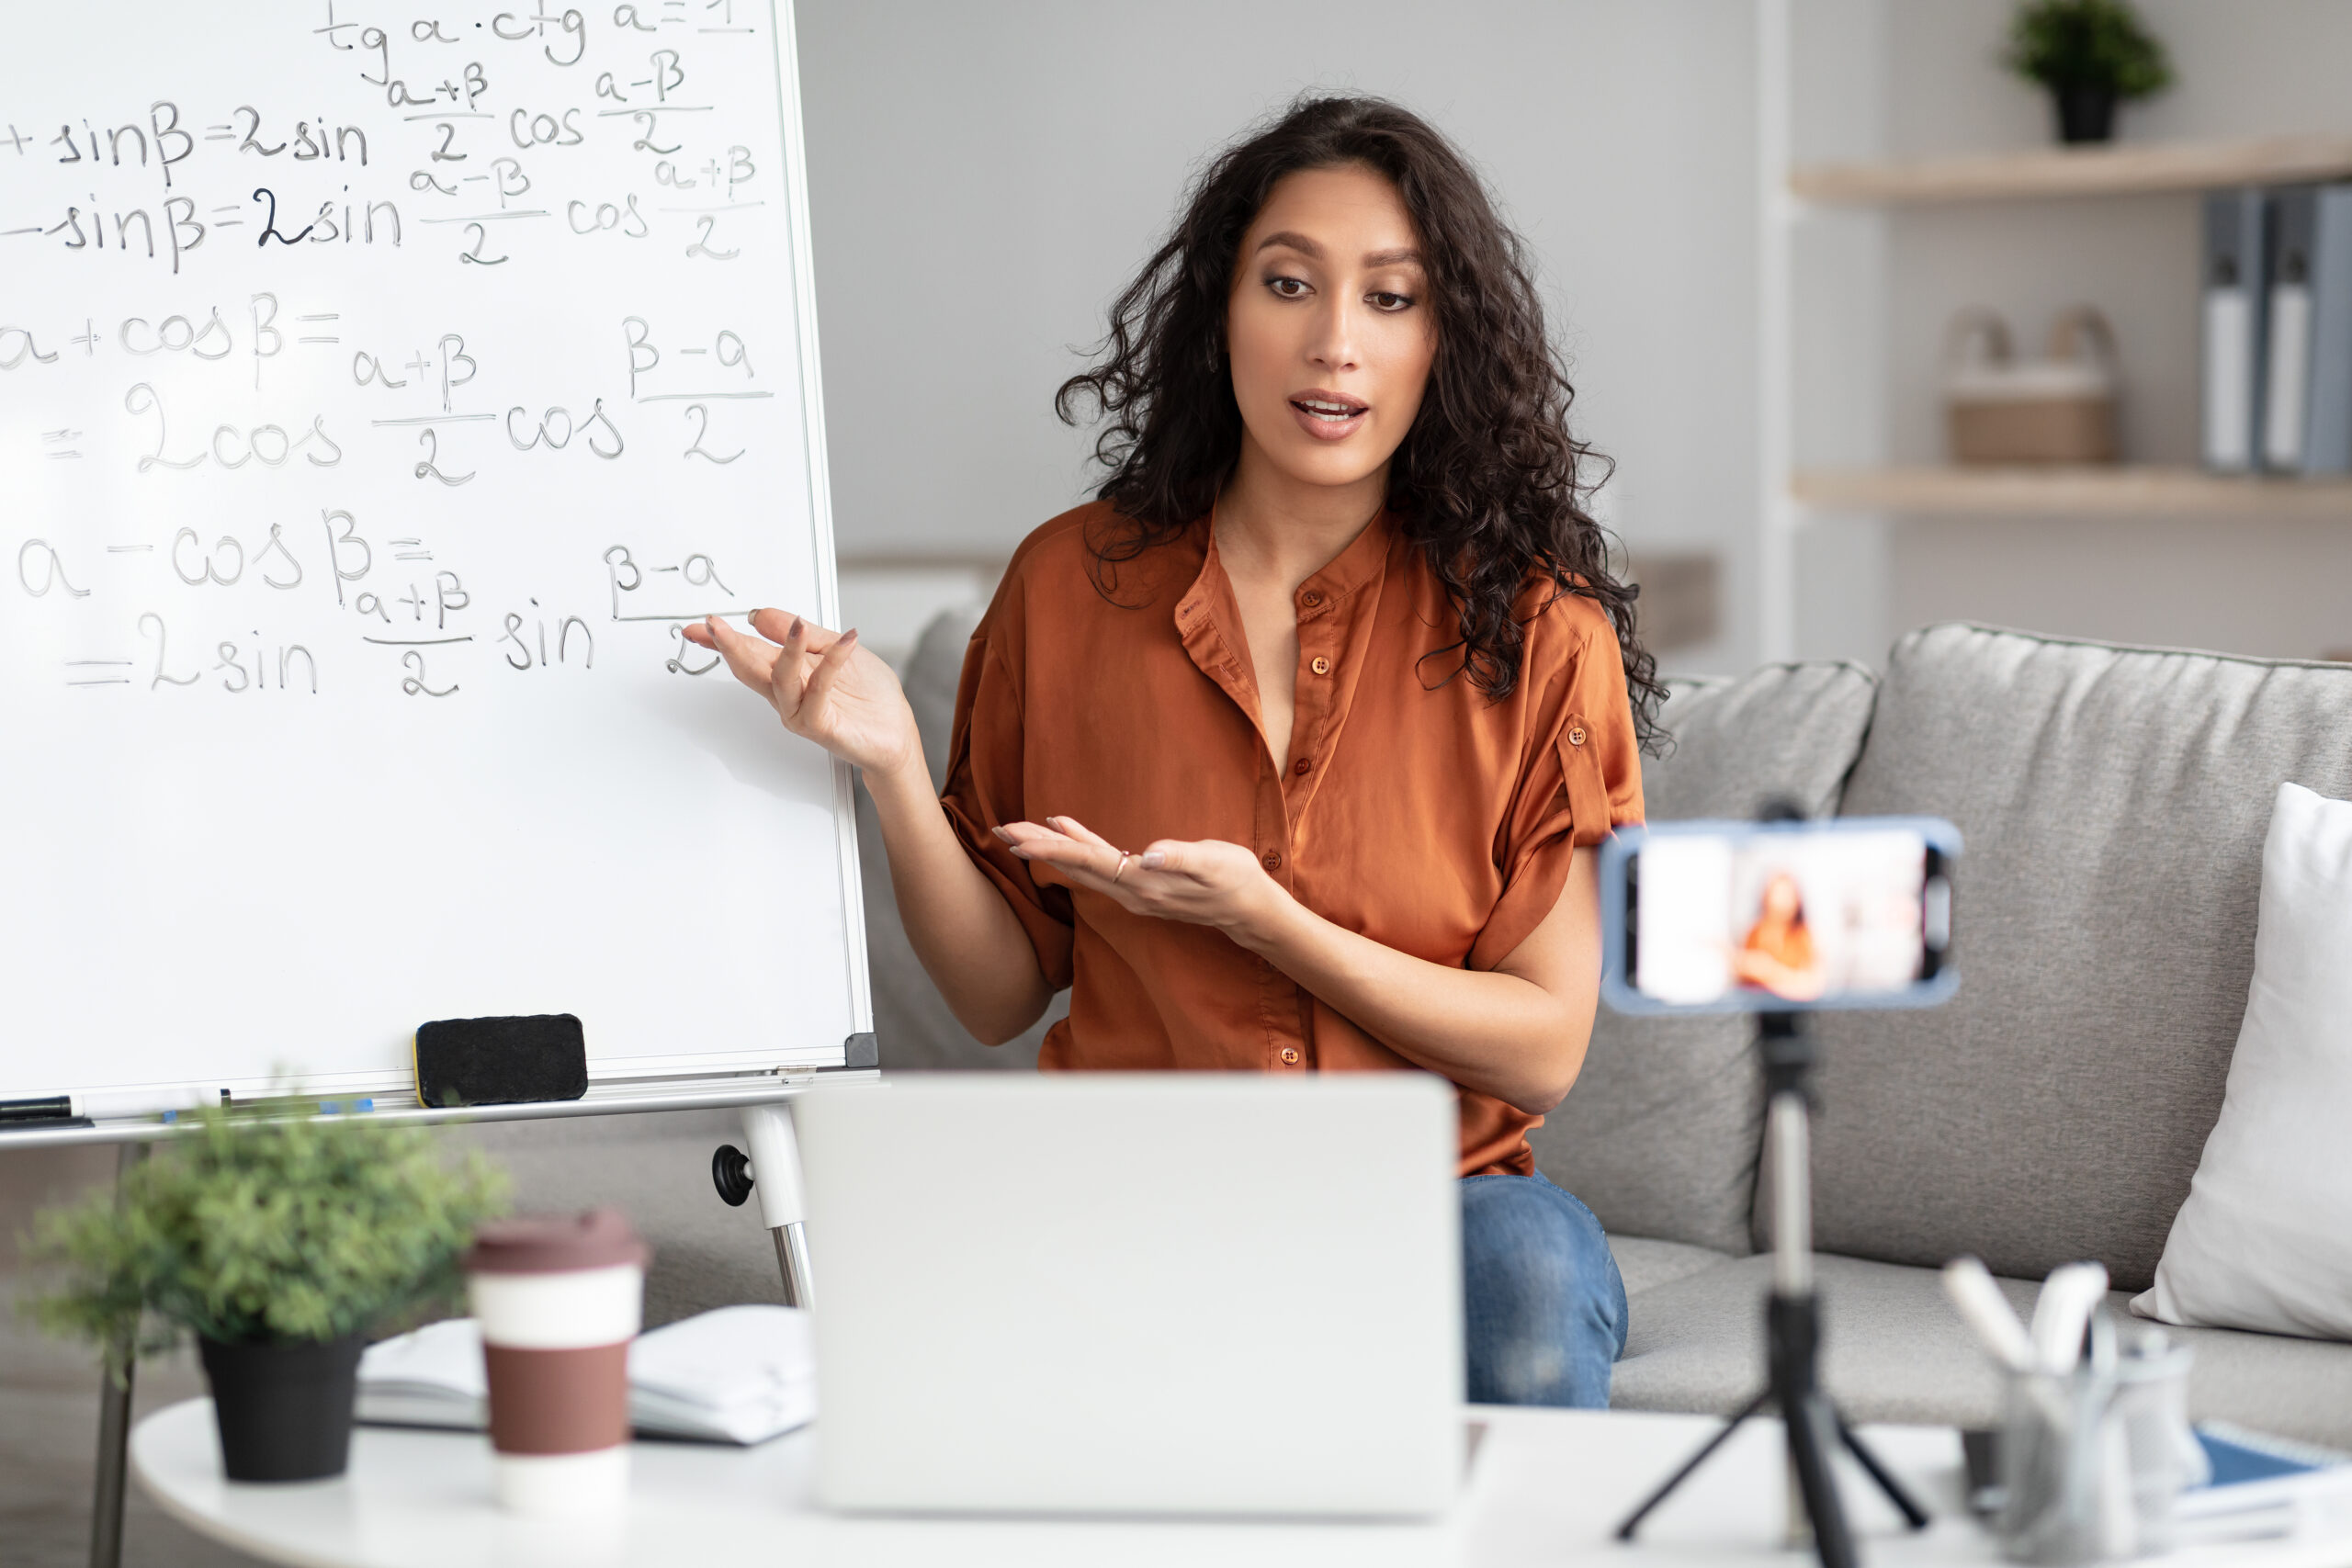 Woman Infront of a whiteboard teaching virtual training